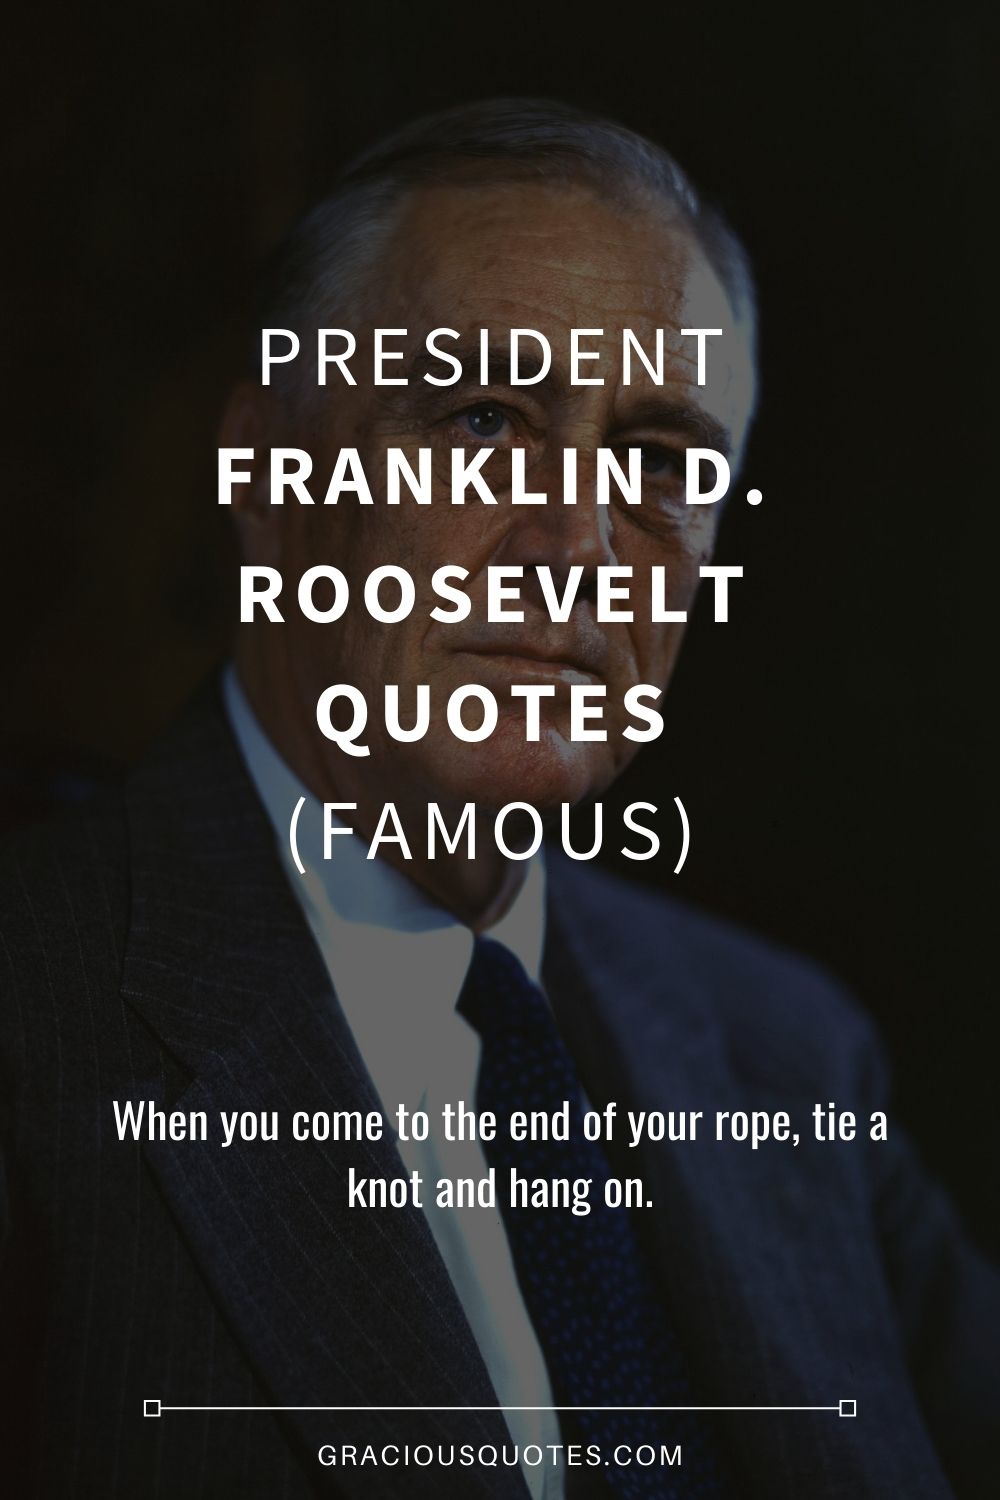 President Franklin D. Roosevelt Quotes (FAMOUS) - Gracious Quotes